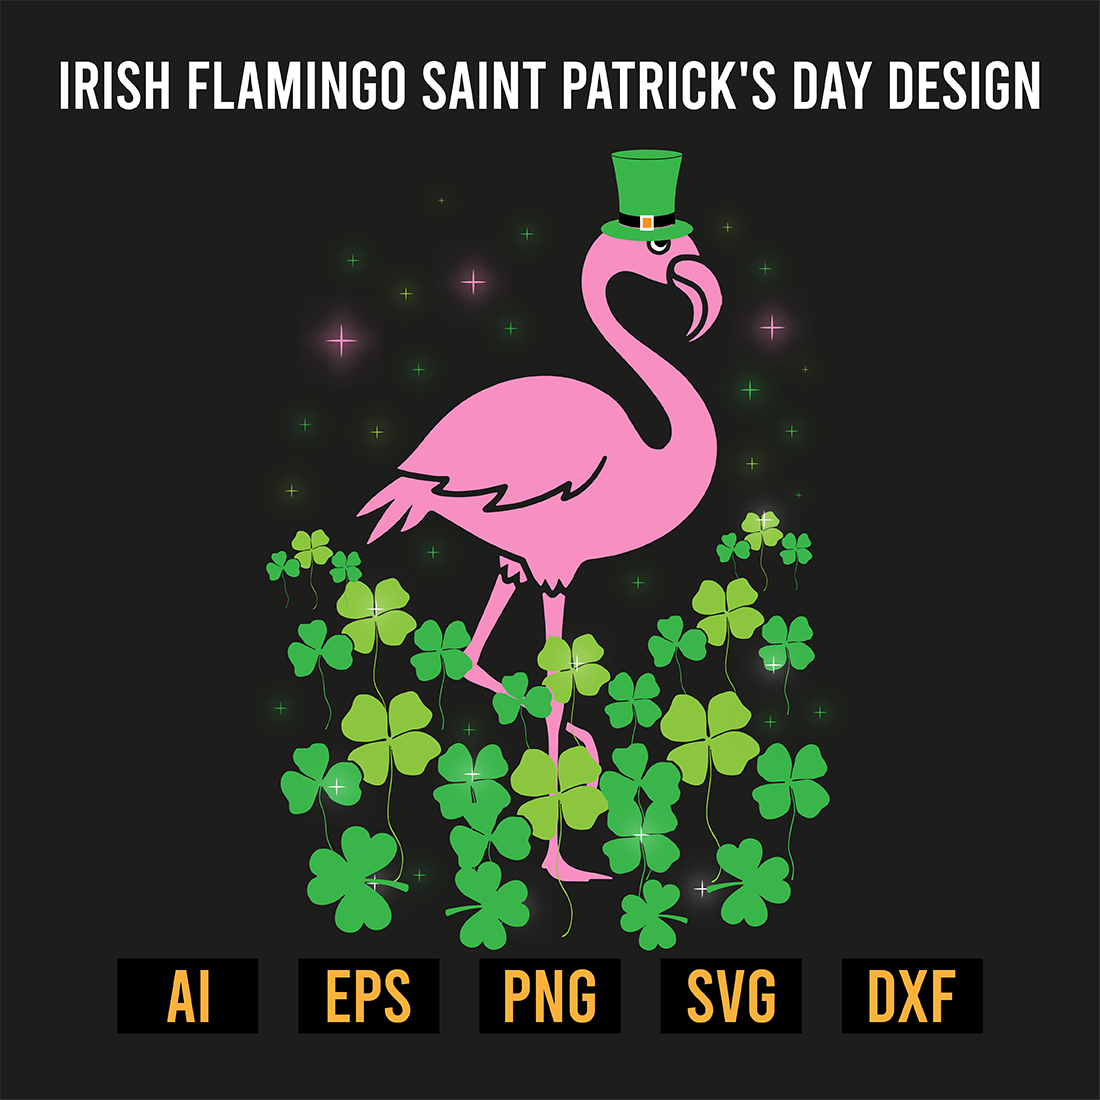 Irish Flamingo Saint Patrick's Day Design preview image.